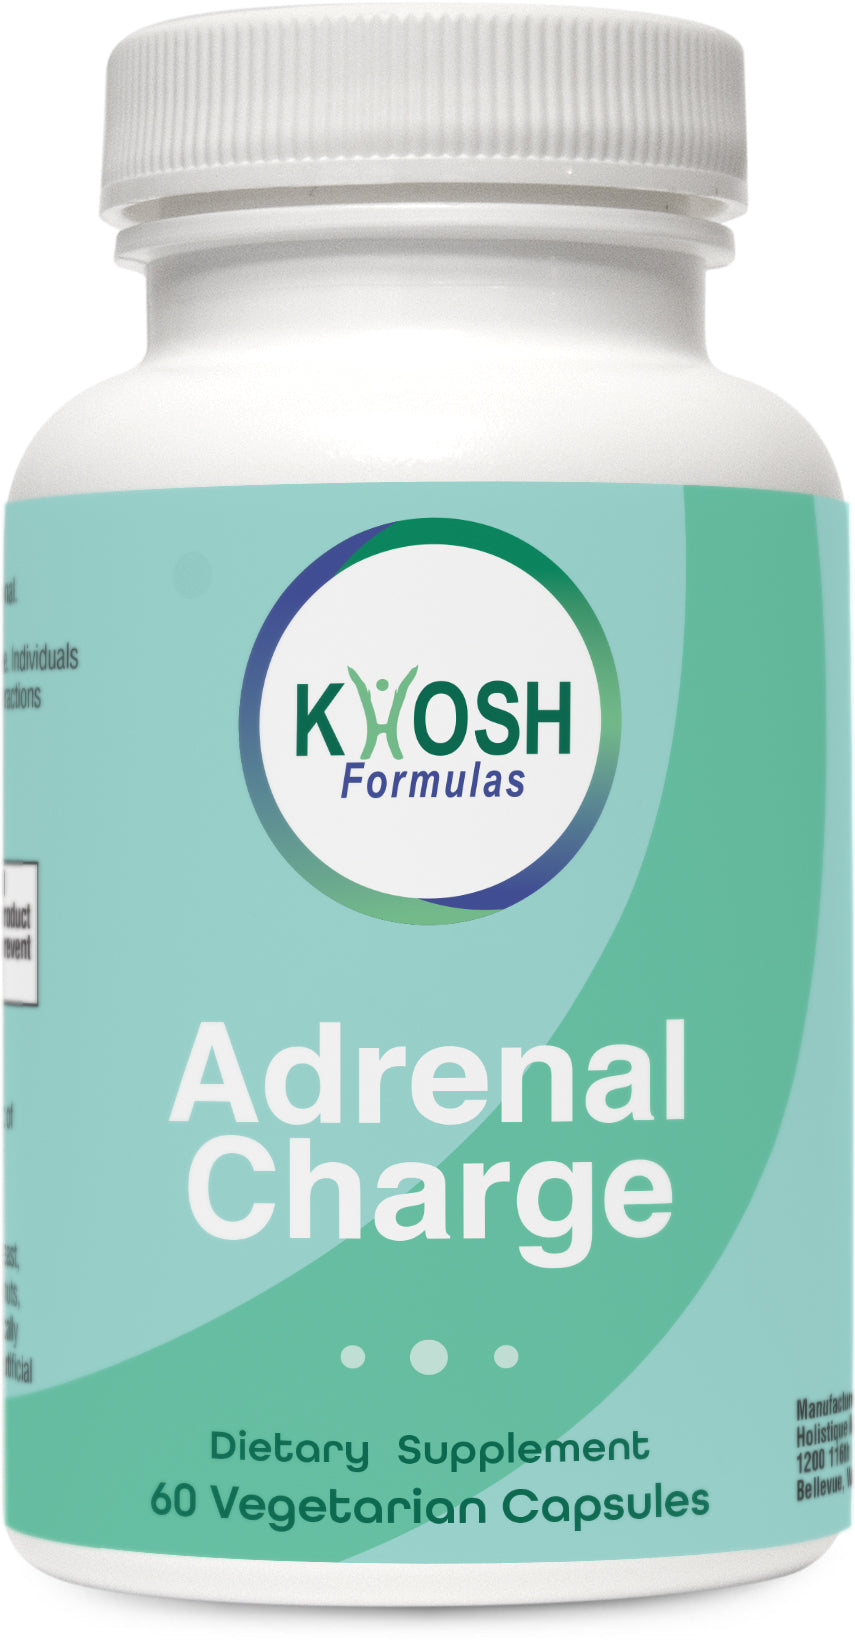 Adrenal Charge (60 caps), KHOSH